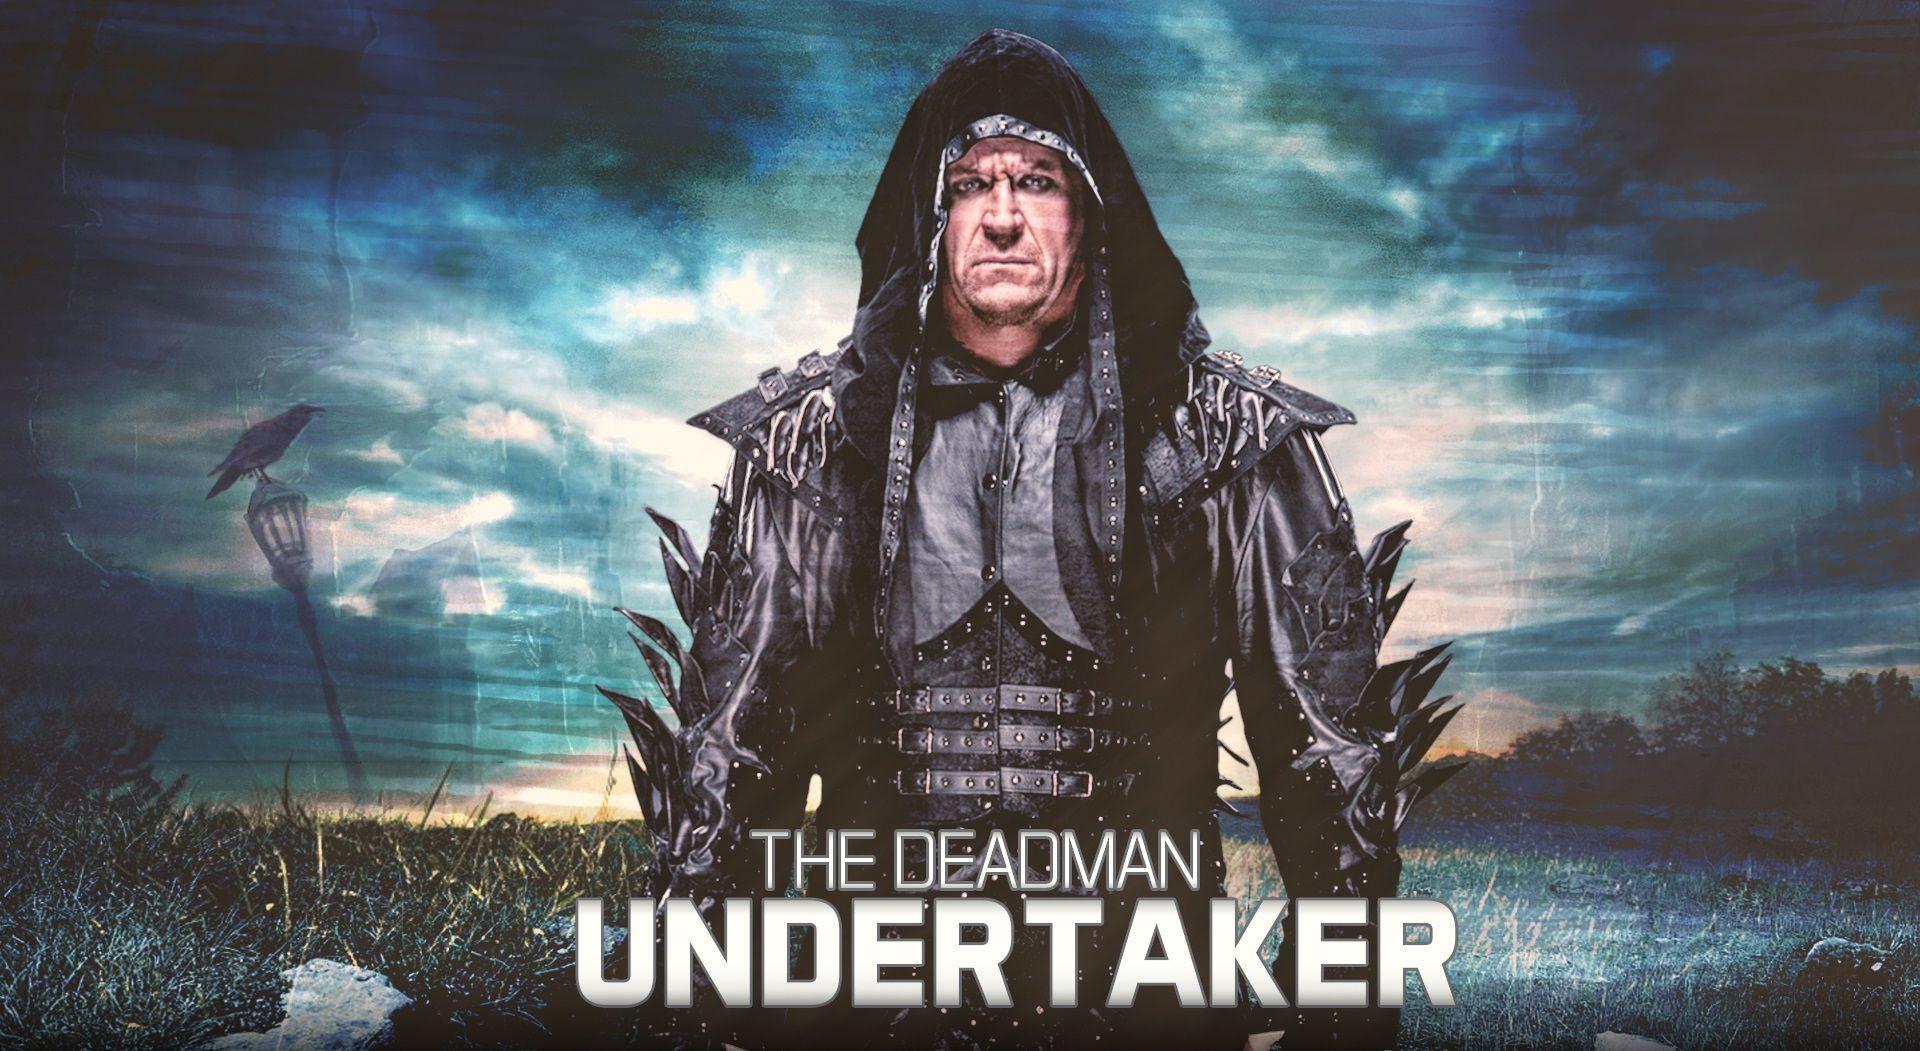 Ewallpaperhub provide the latest image gallery of Undertaker